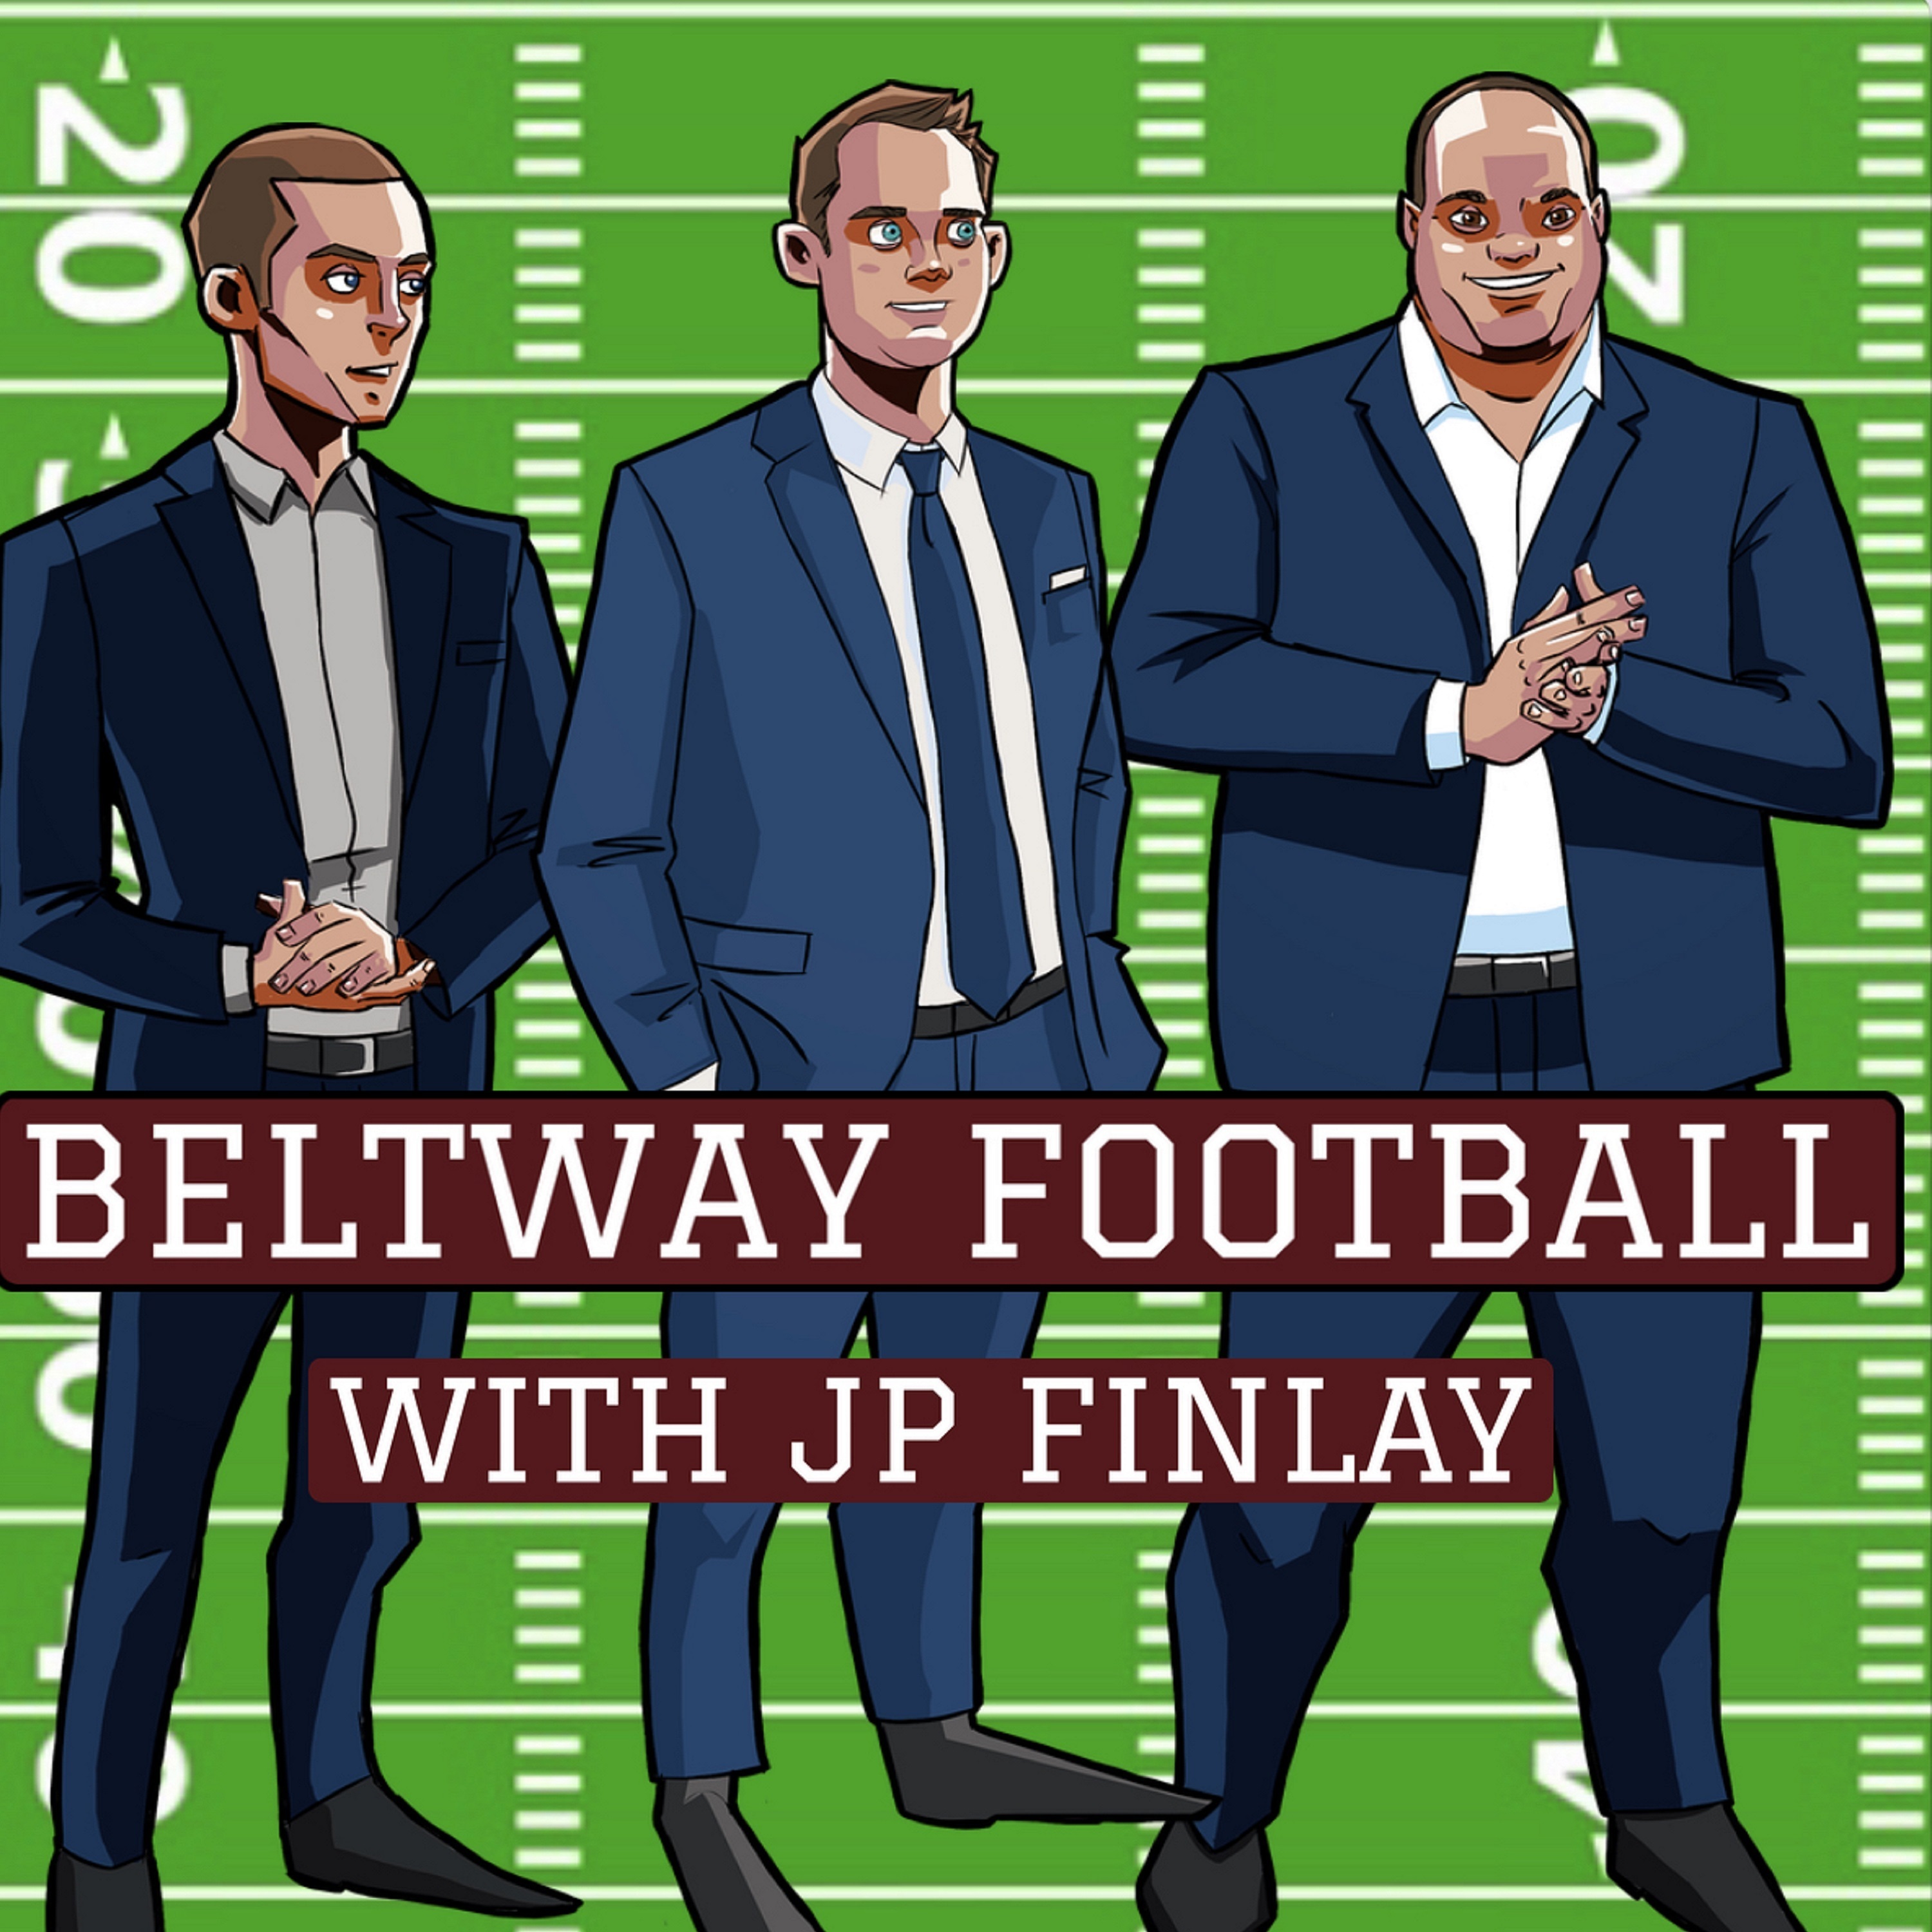 Beltway Football